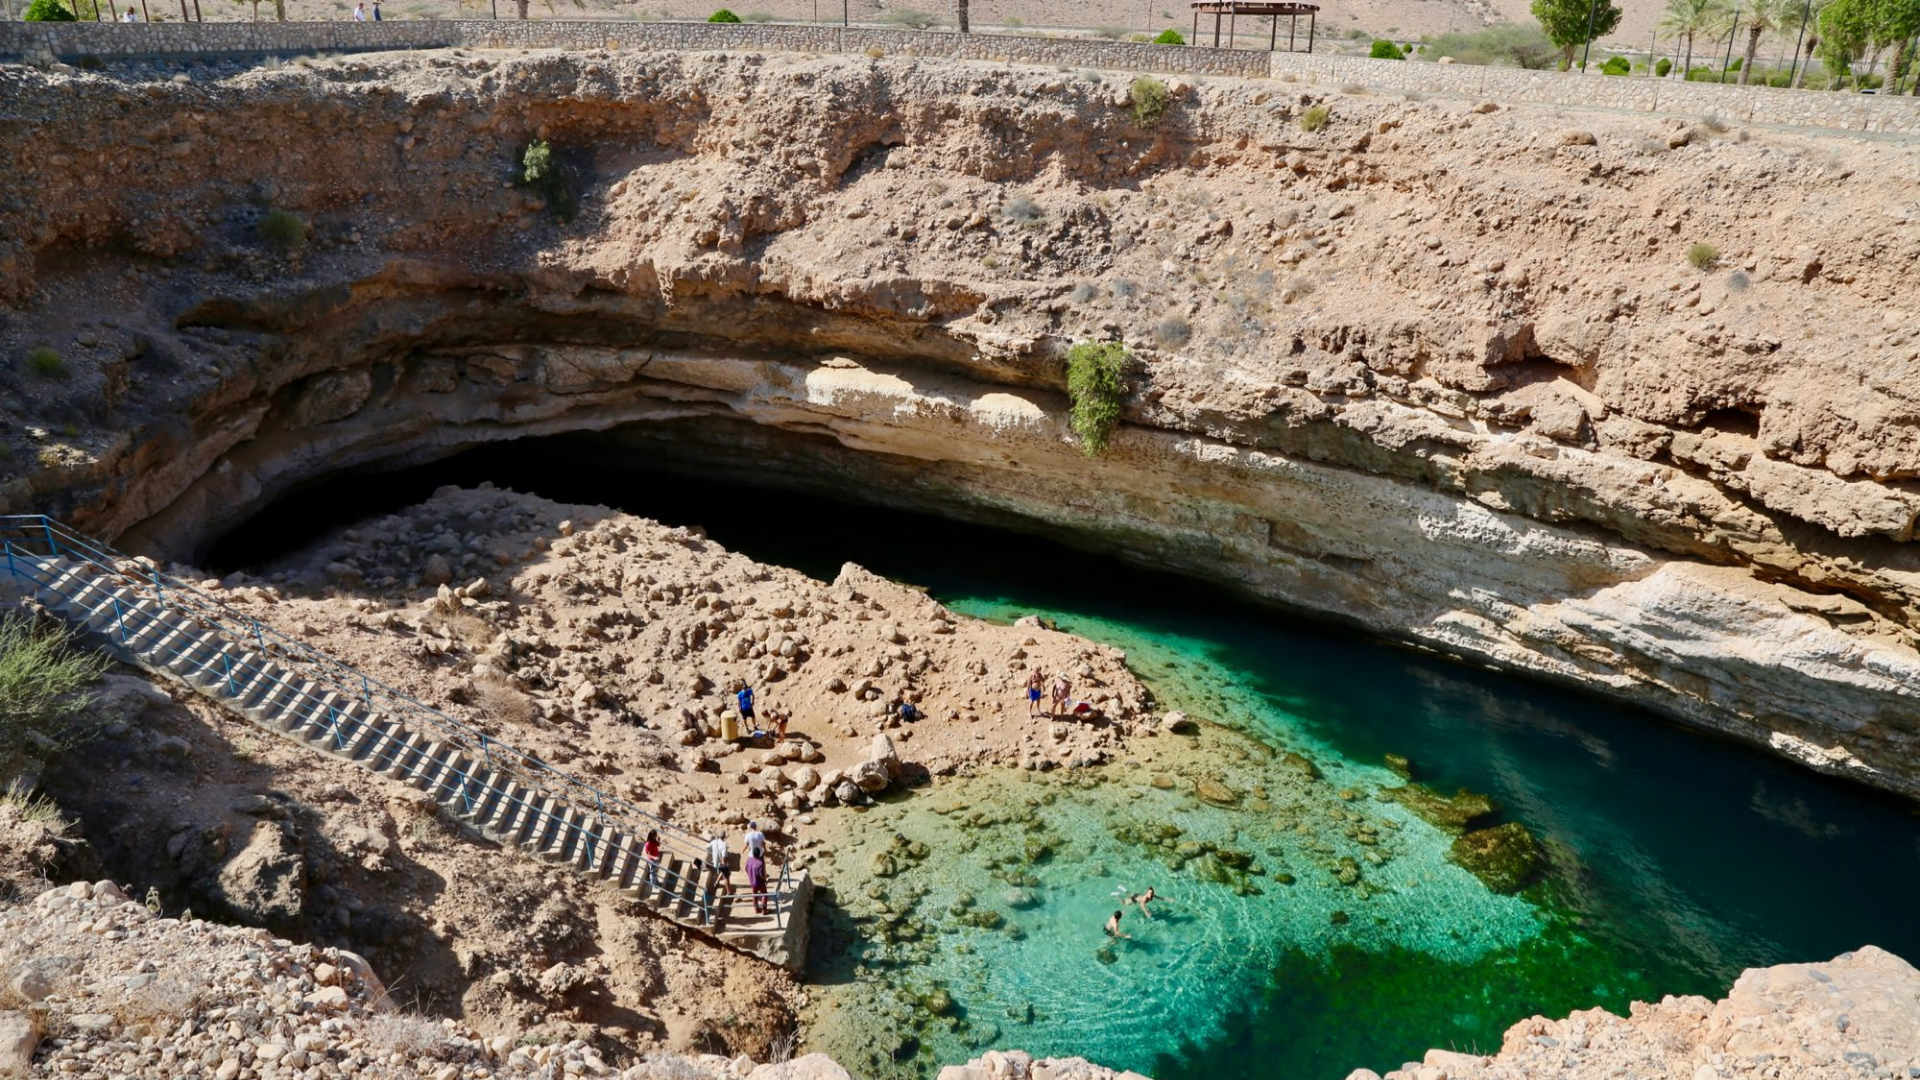 Bimmah Sinkhole Oman